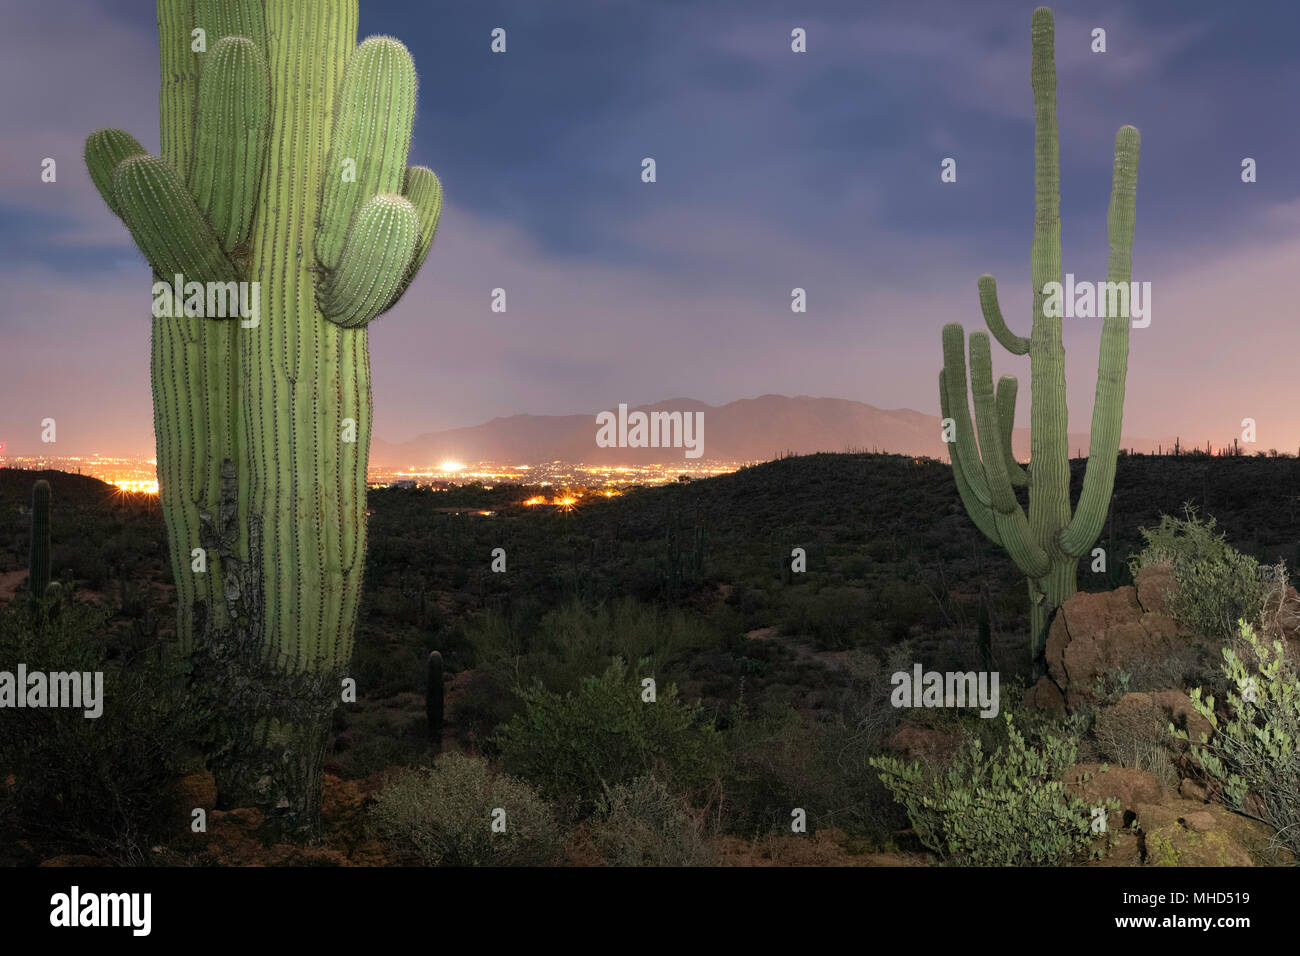 Saguaro cactus (Carnegiea gigantea) in the evening with city lights in the distance,Tucson, Arizona Stock Photo